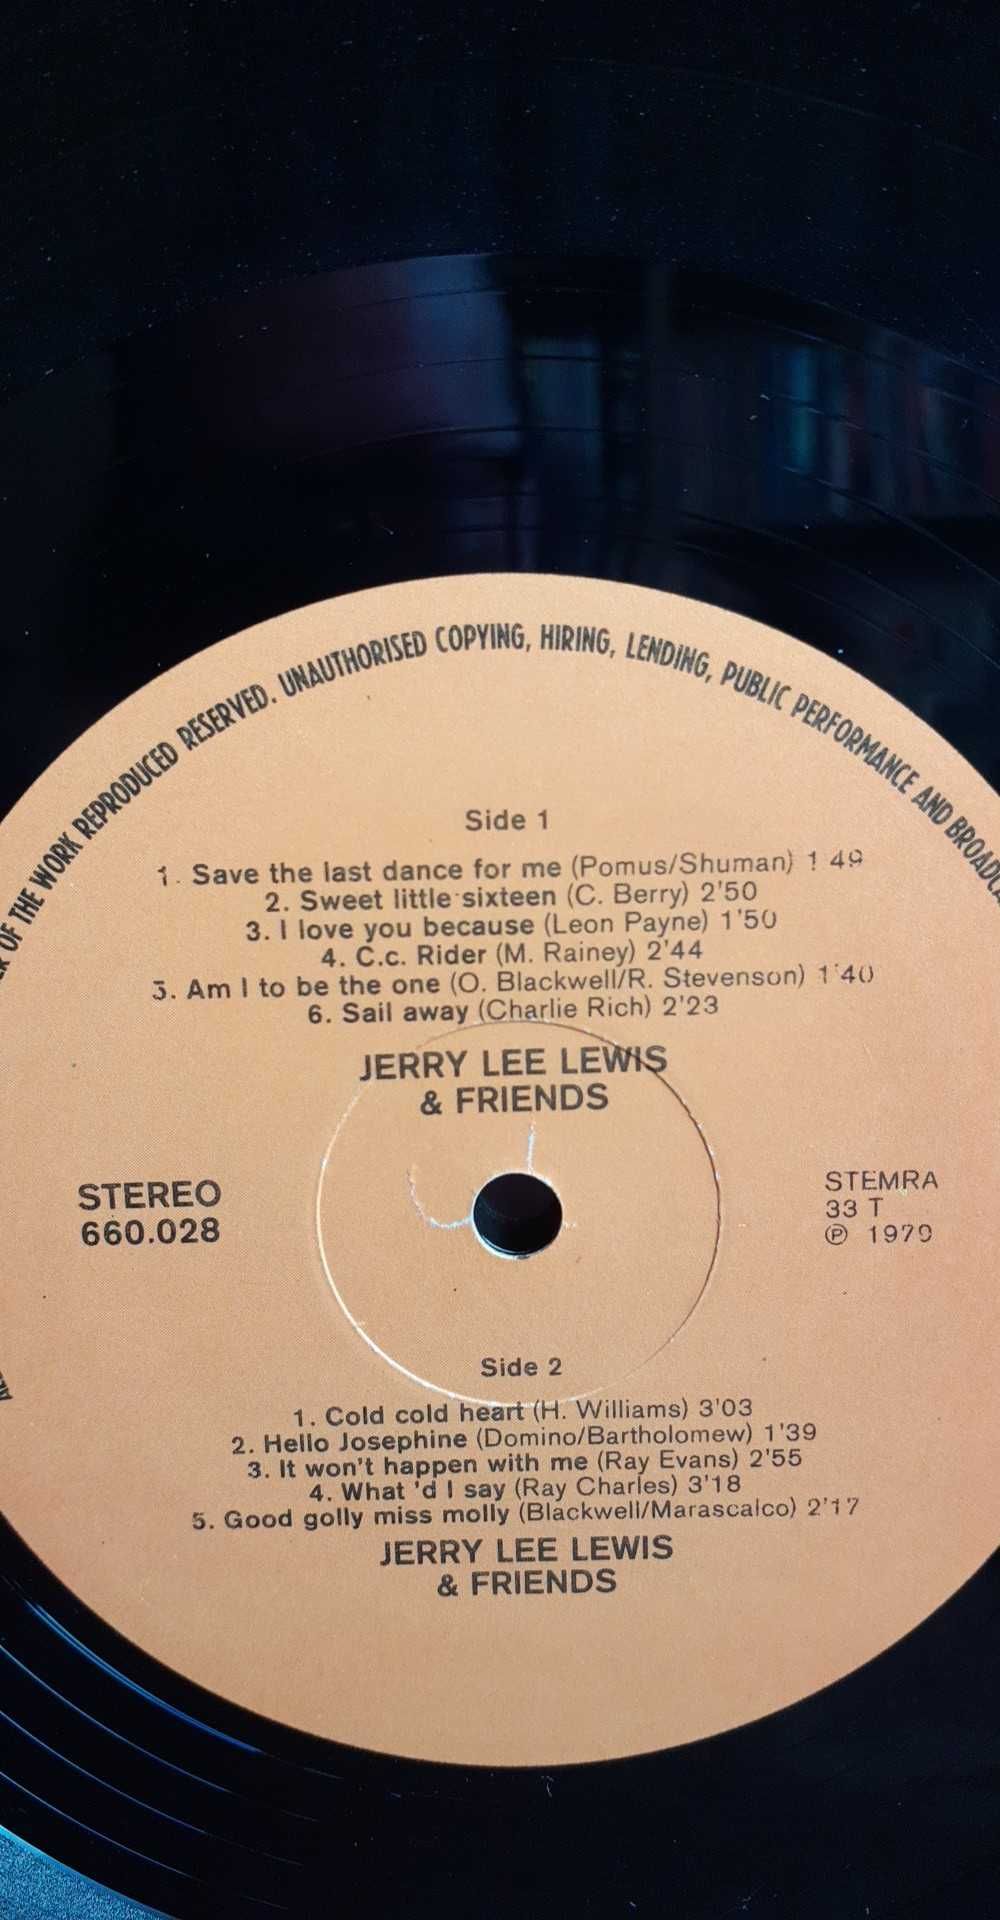 Jerry Lee Lewis "Jerry Lee Lewis and Friends" - płyta winylowa